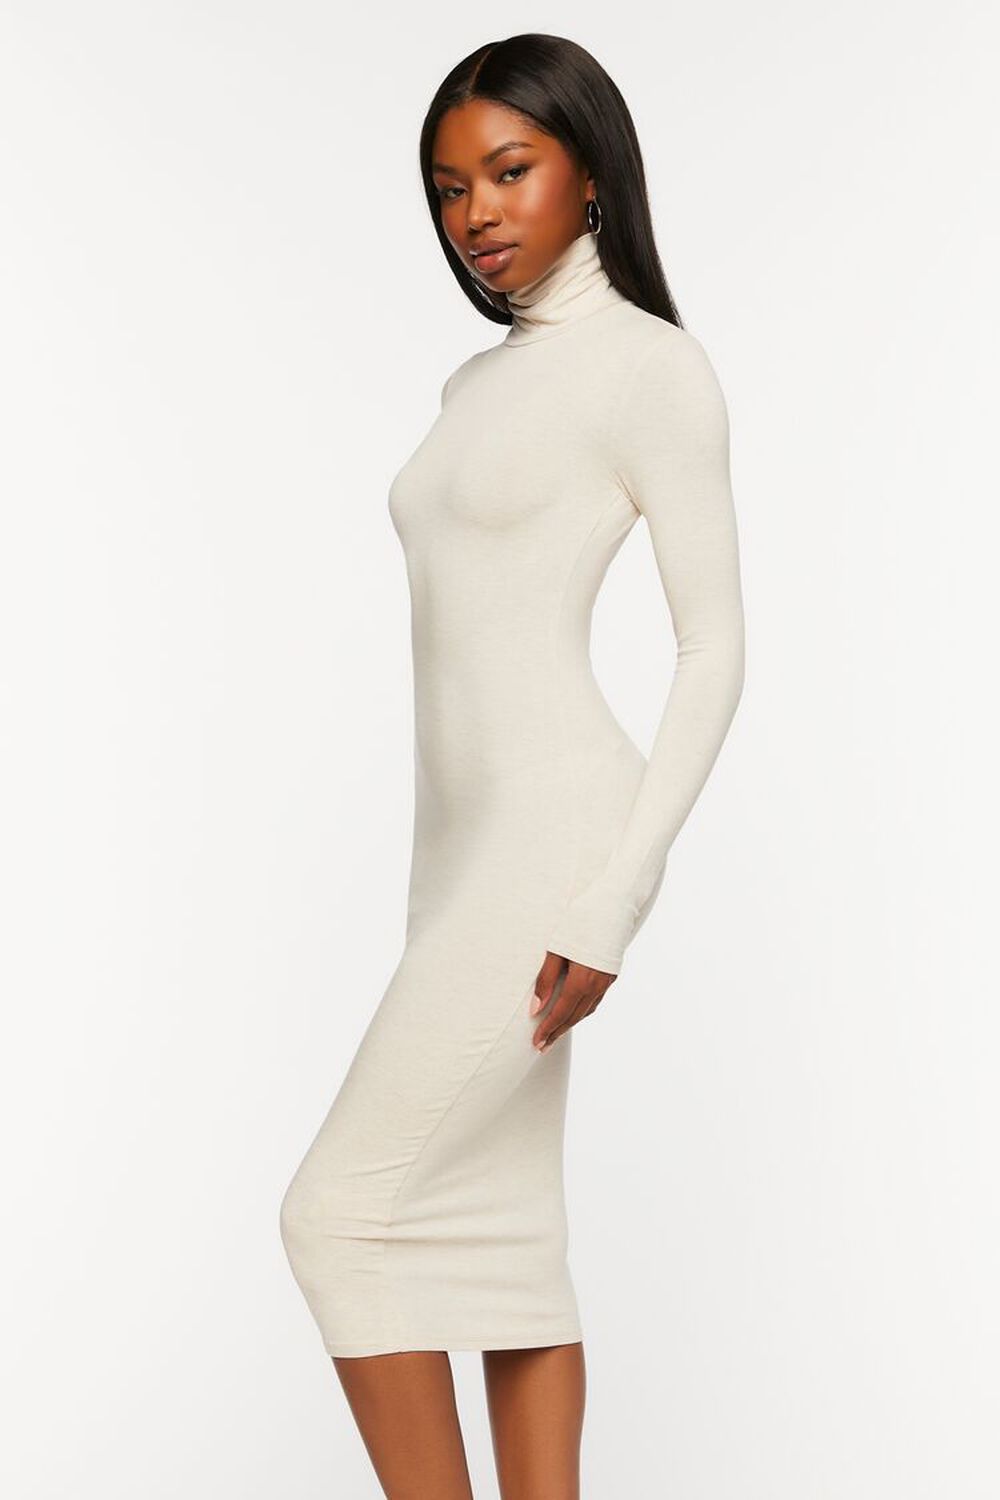 OATMEAL Turtleneck Long-Sleeve Midi Dress, image 2